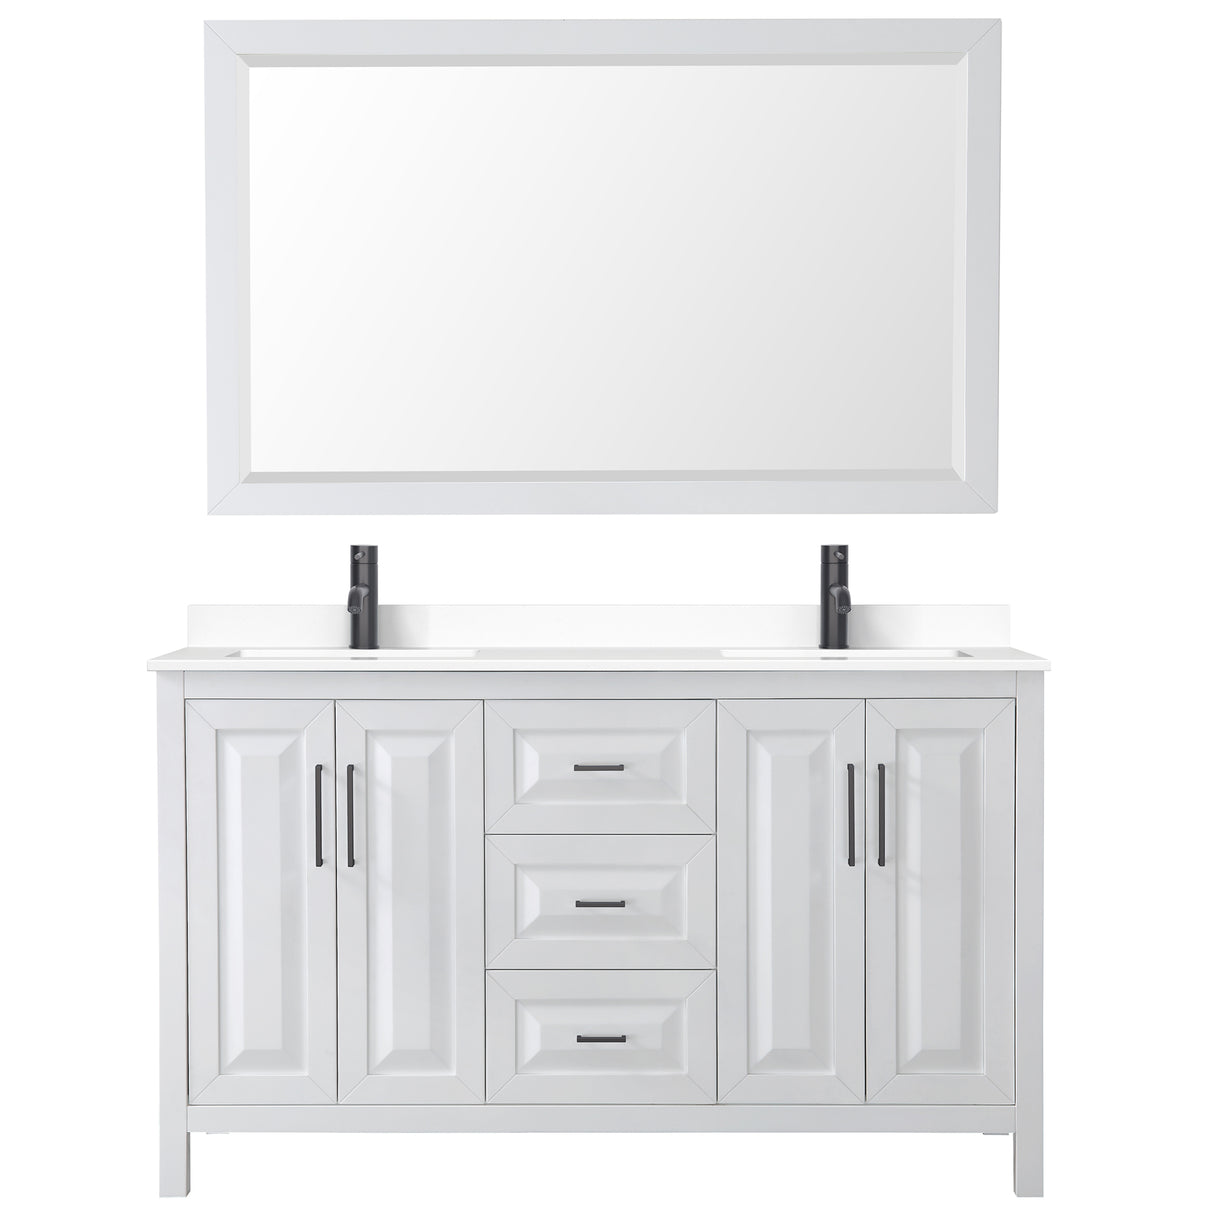 Daria 60 Inch Double Bathroom Vanity in White White Cultured Marble Countertop Undermount Square Sinks Matte Black Trim 58 Inch Mirror